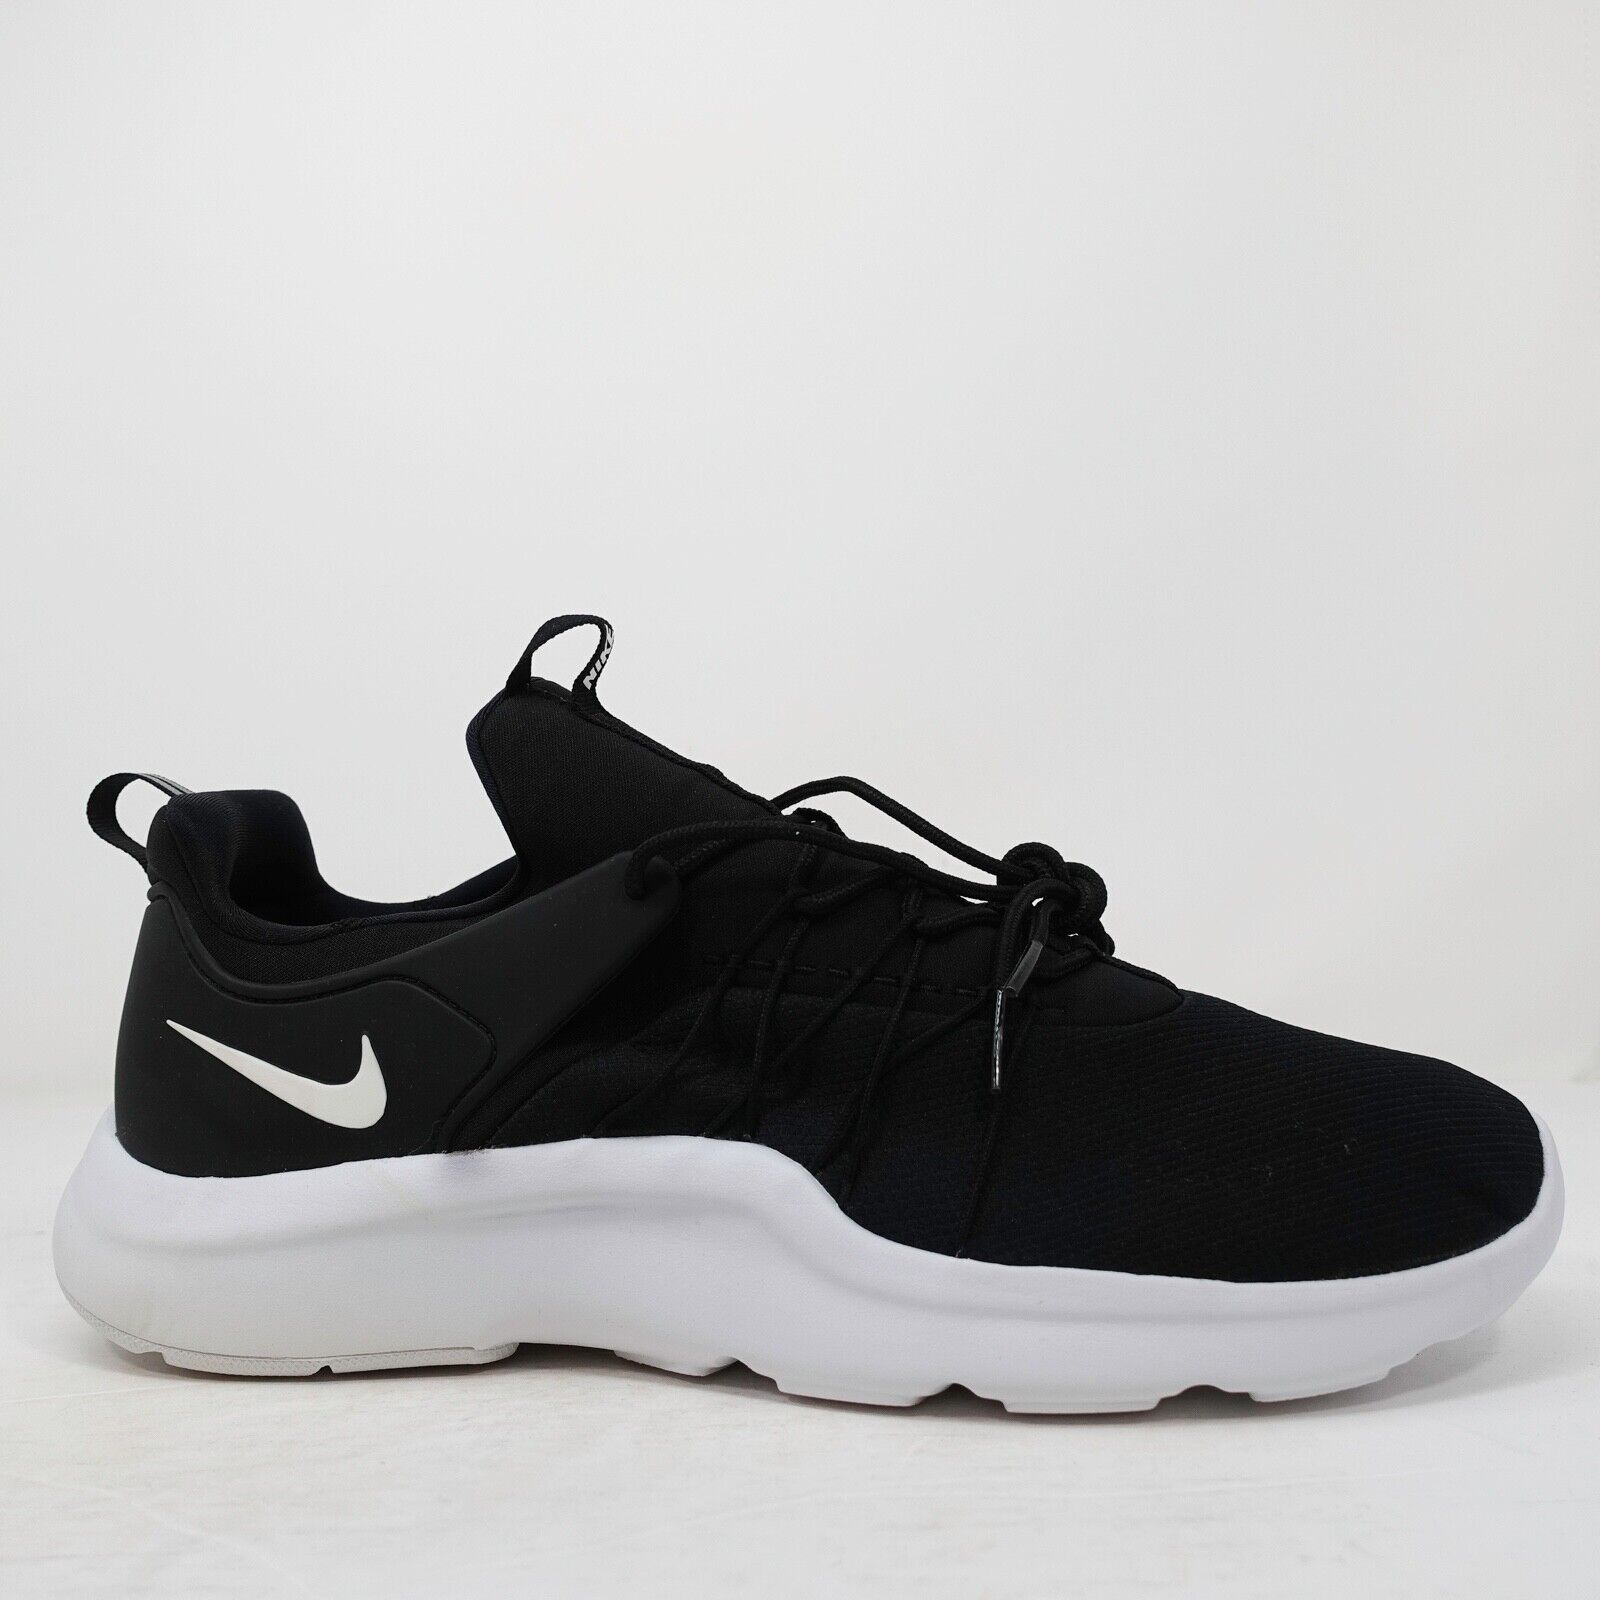 Nike Darwin Black White Shoes Sneakers 819803 002 Mens Size | eBay